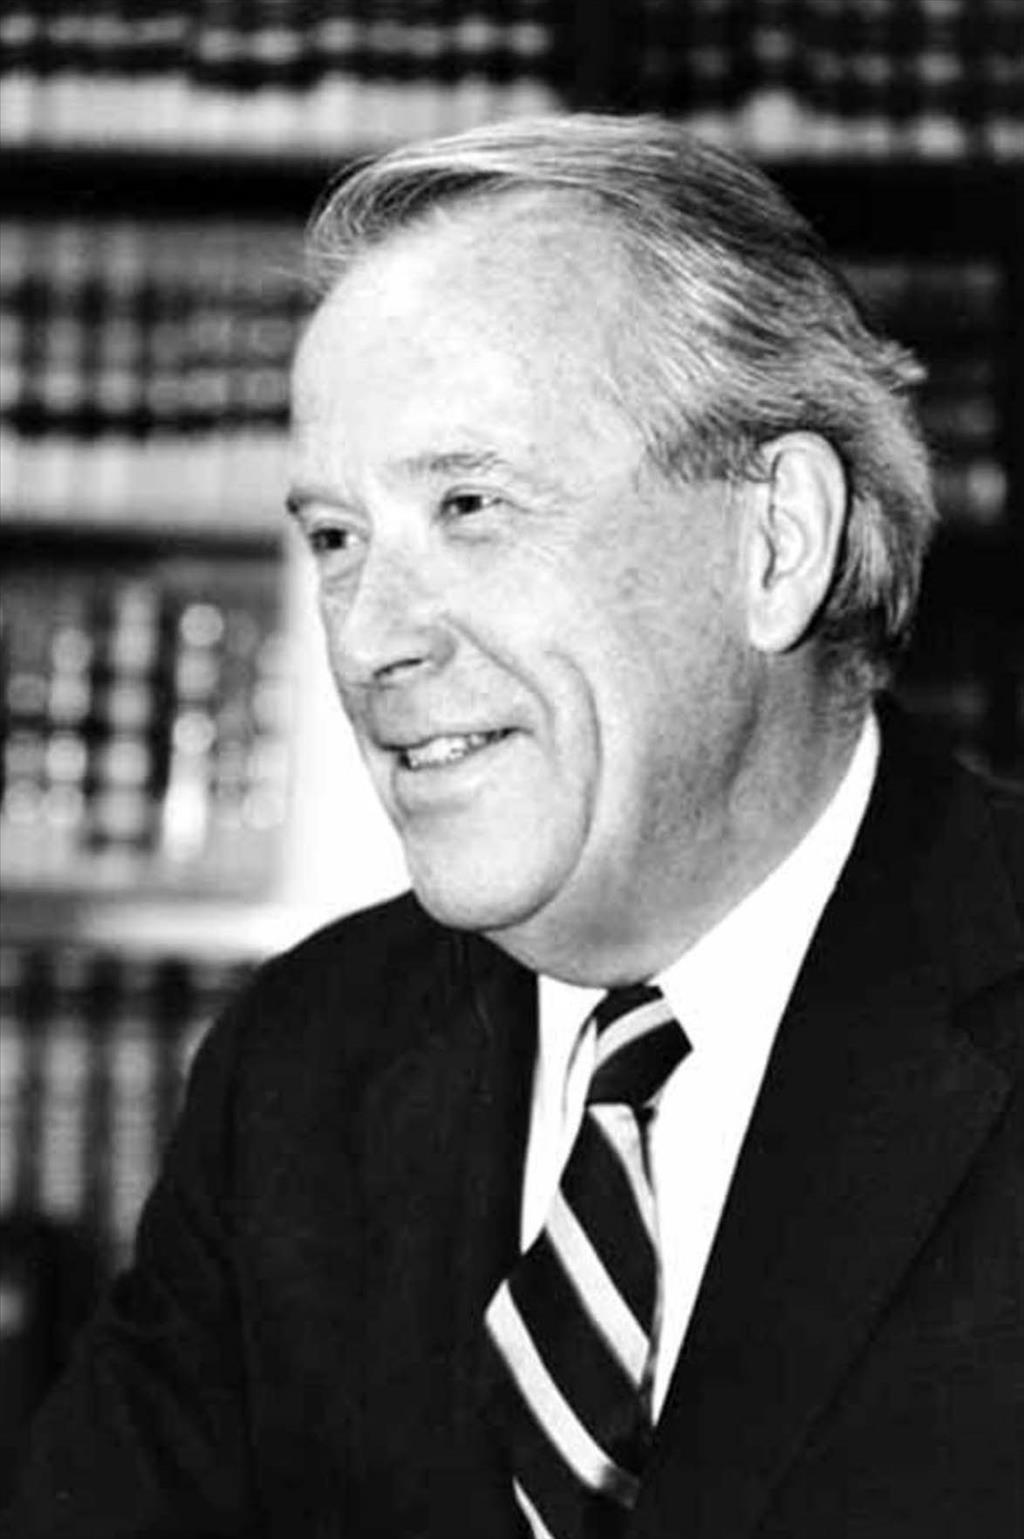 senator-henry-scoop-jackson-1912-1983-ca-1980s.jpg